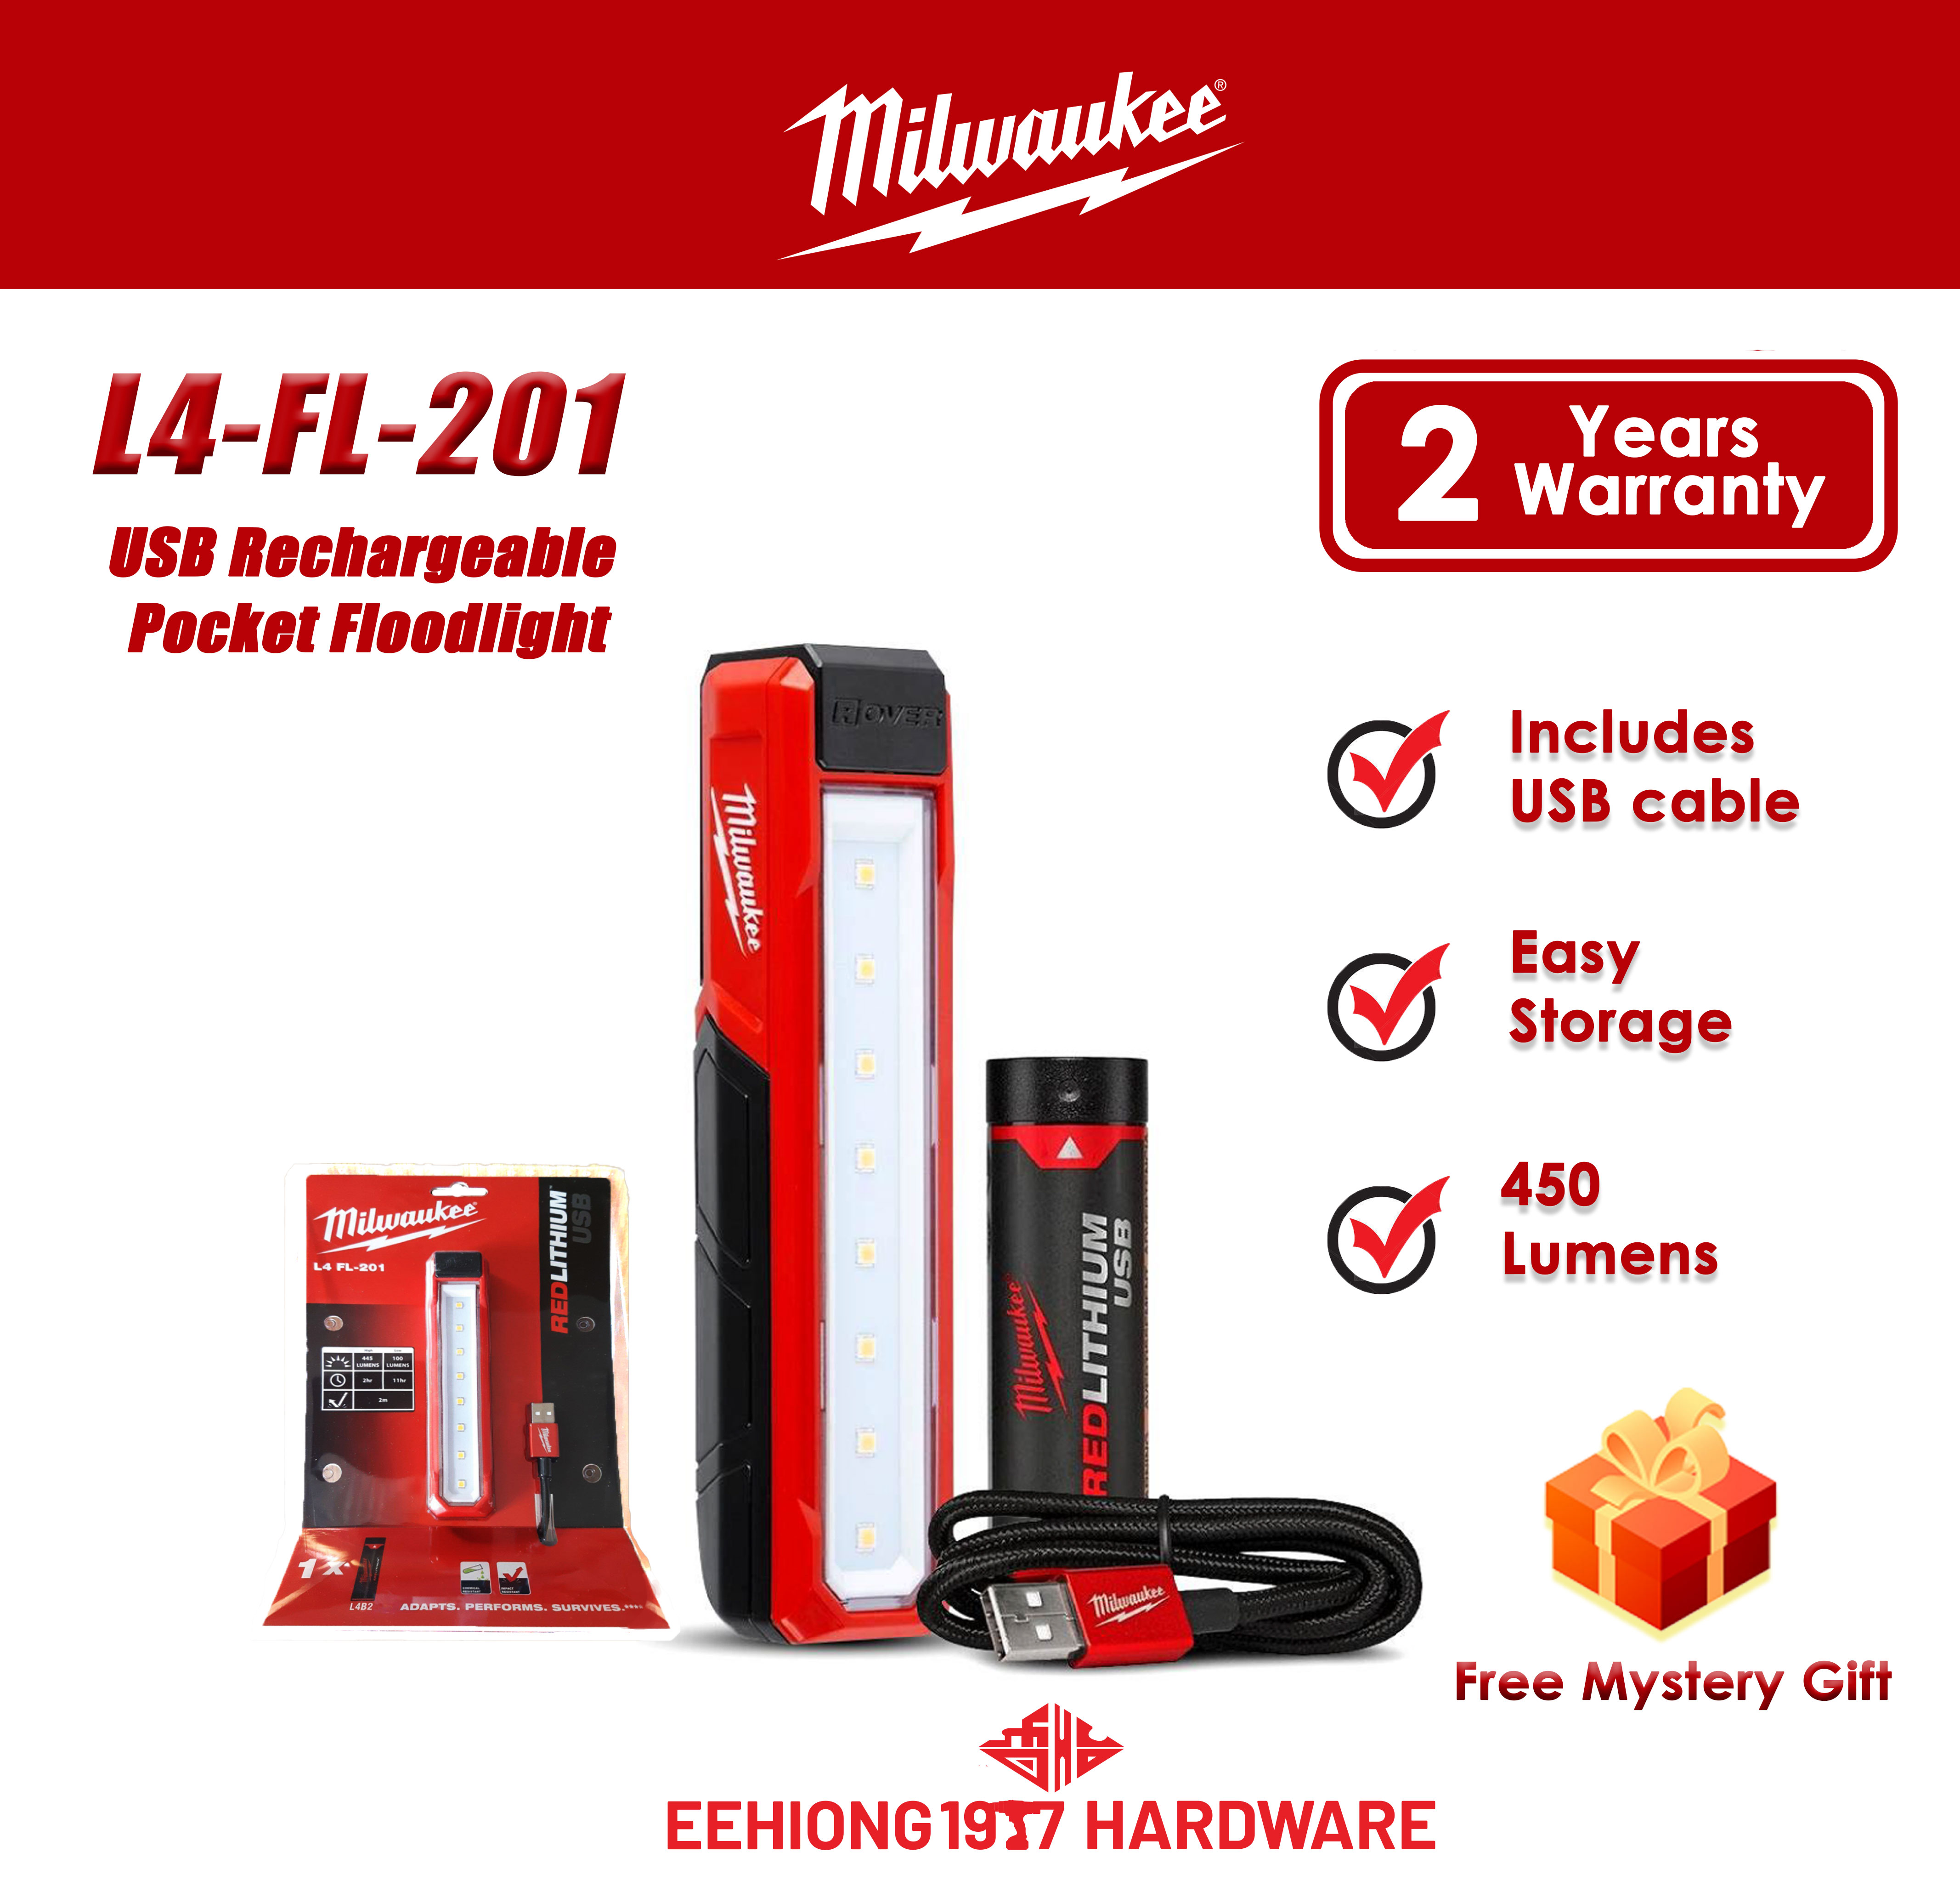 MILWAUKEE L4 FL-201 REDLITHIUM USB Personal Flood Light Lampu Lazada